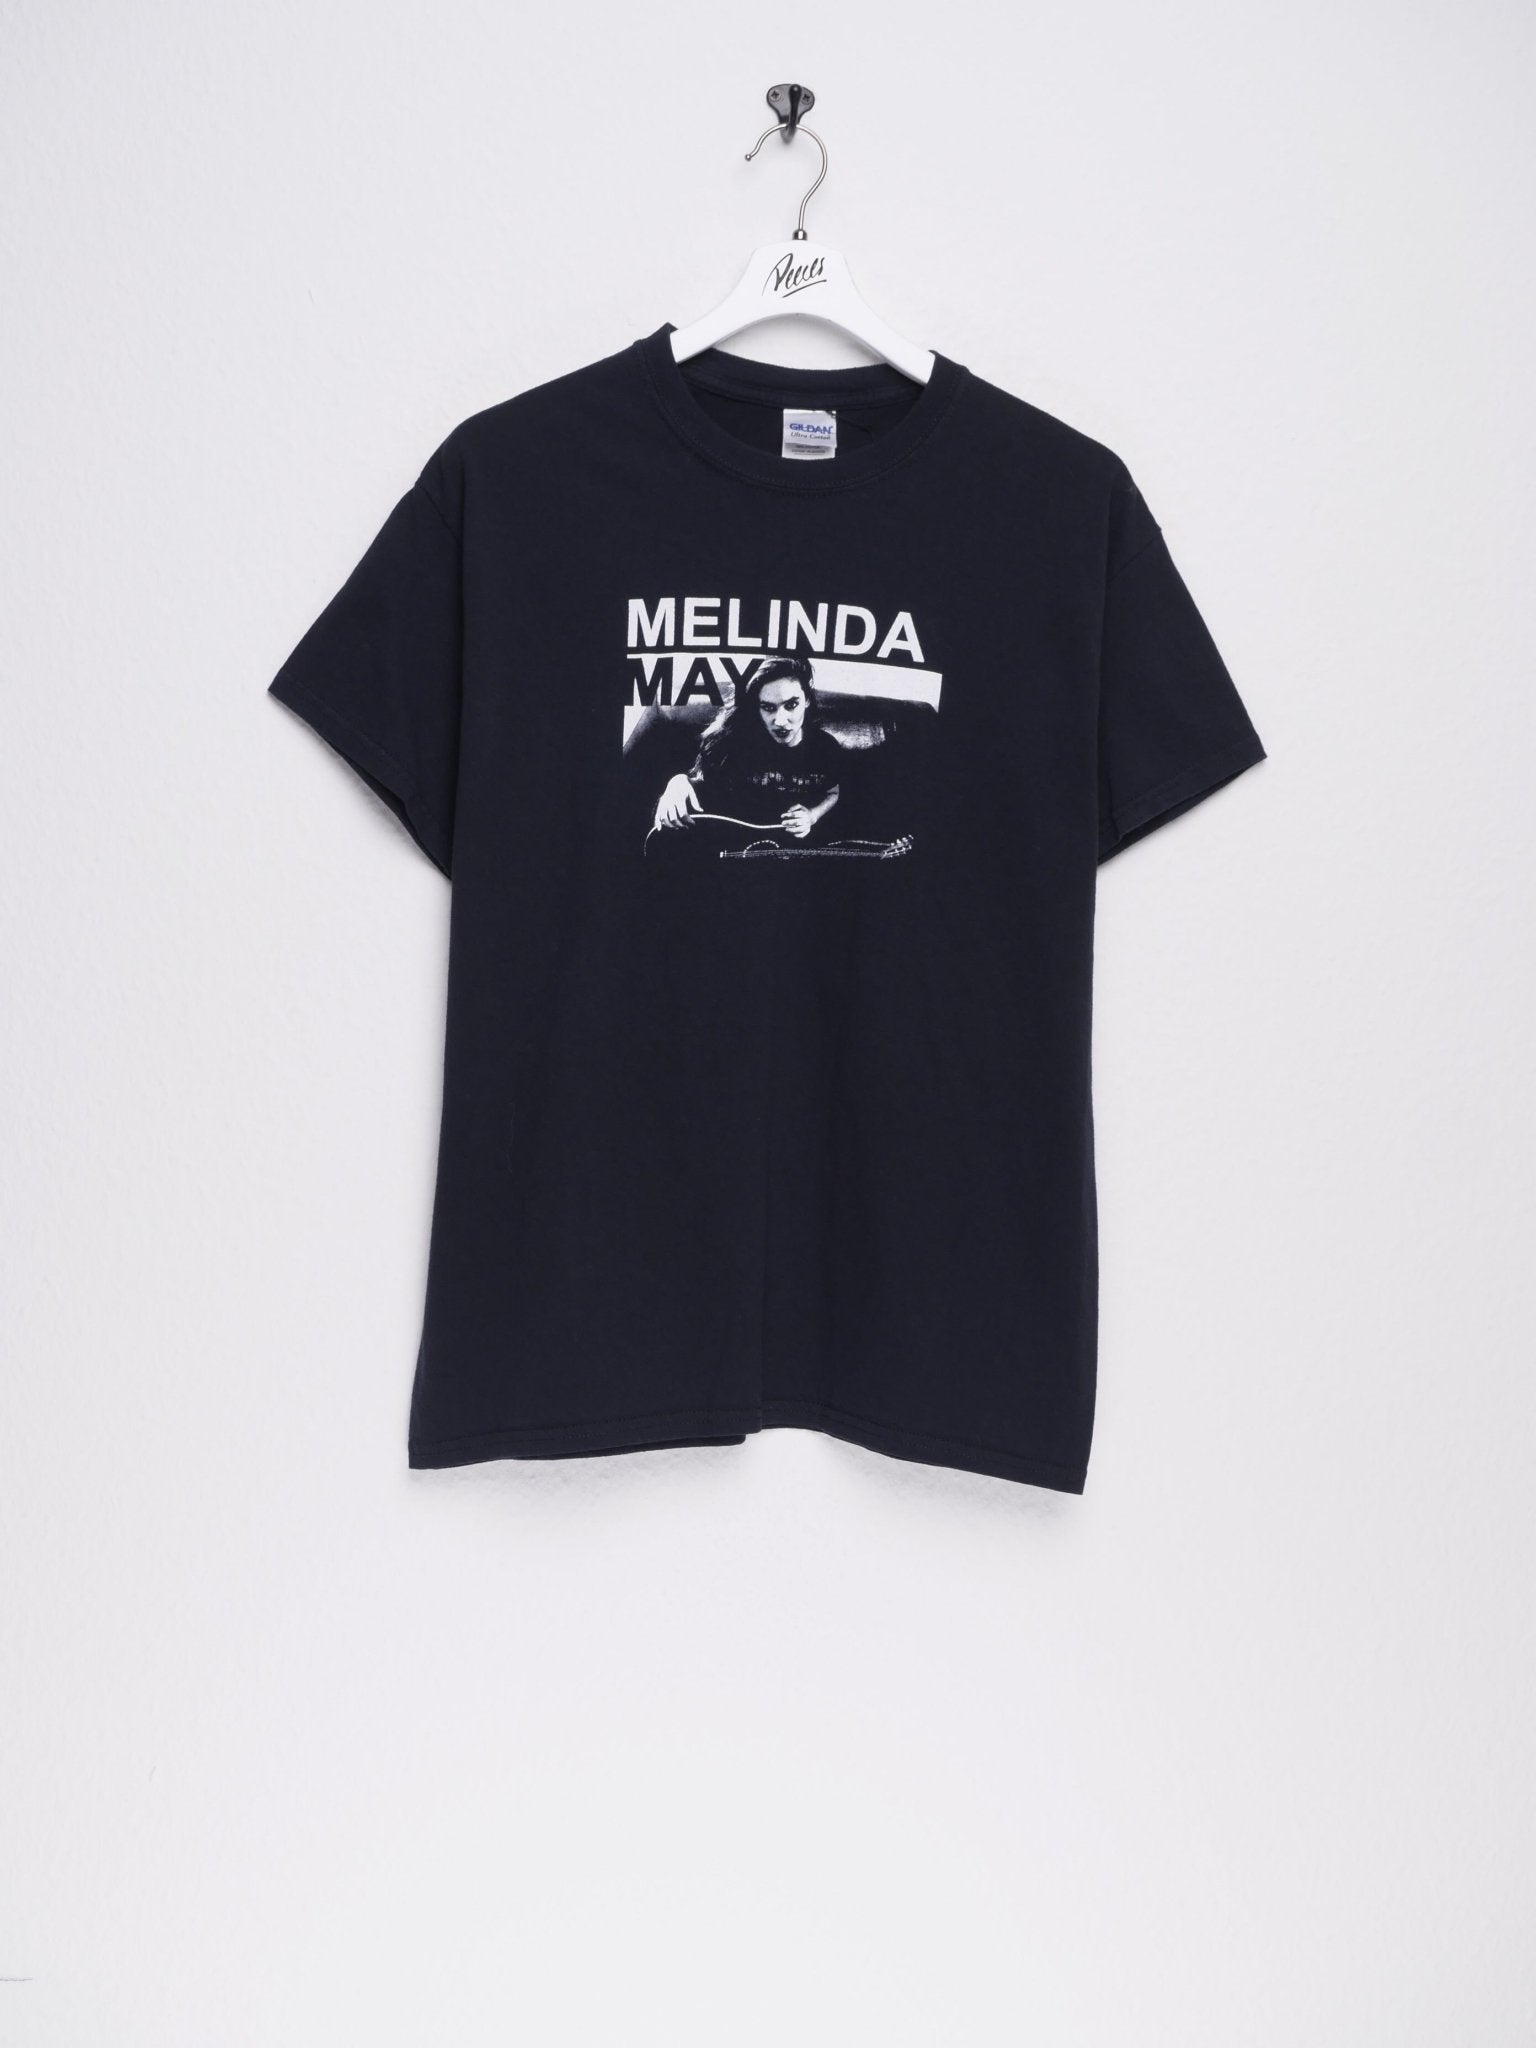 Melinda May printed Graphic Vintage Shirt - Peeces